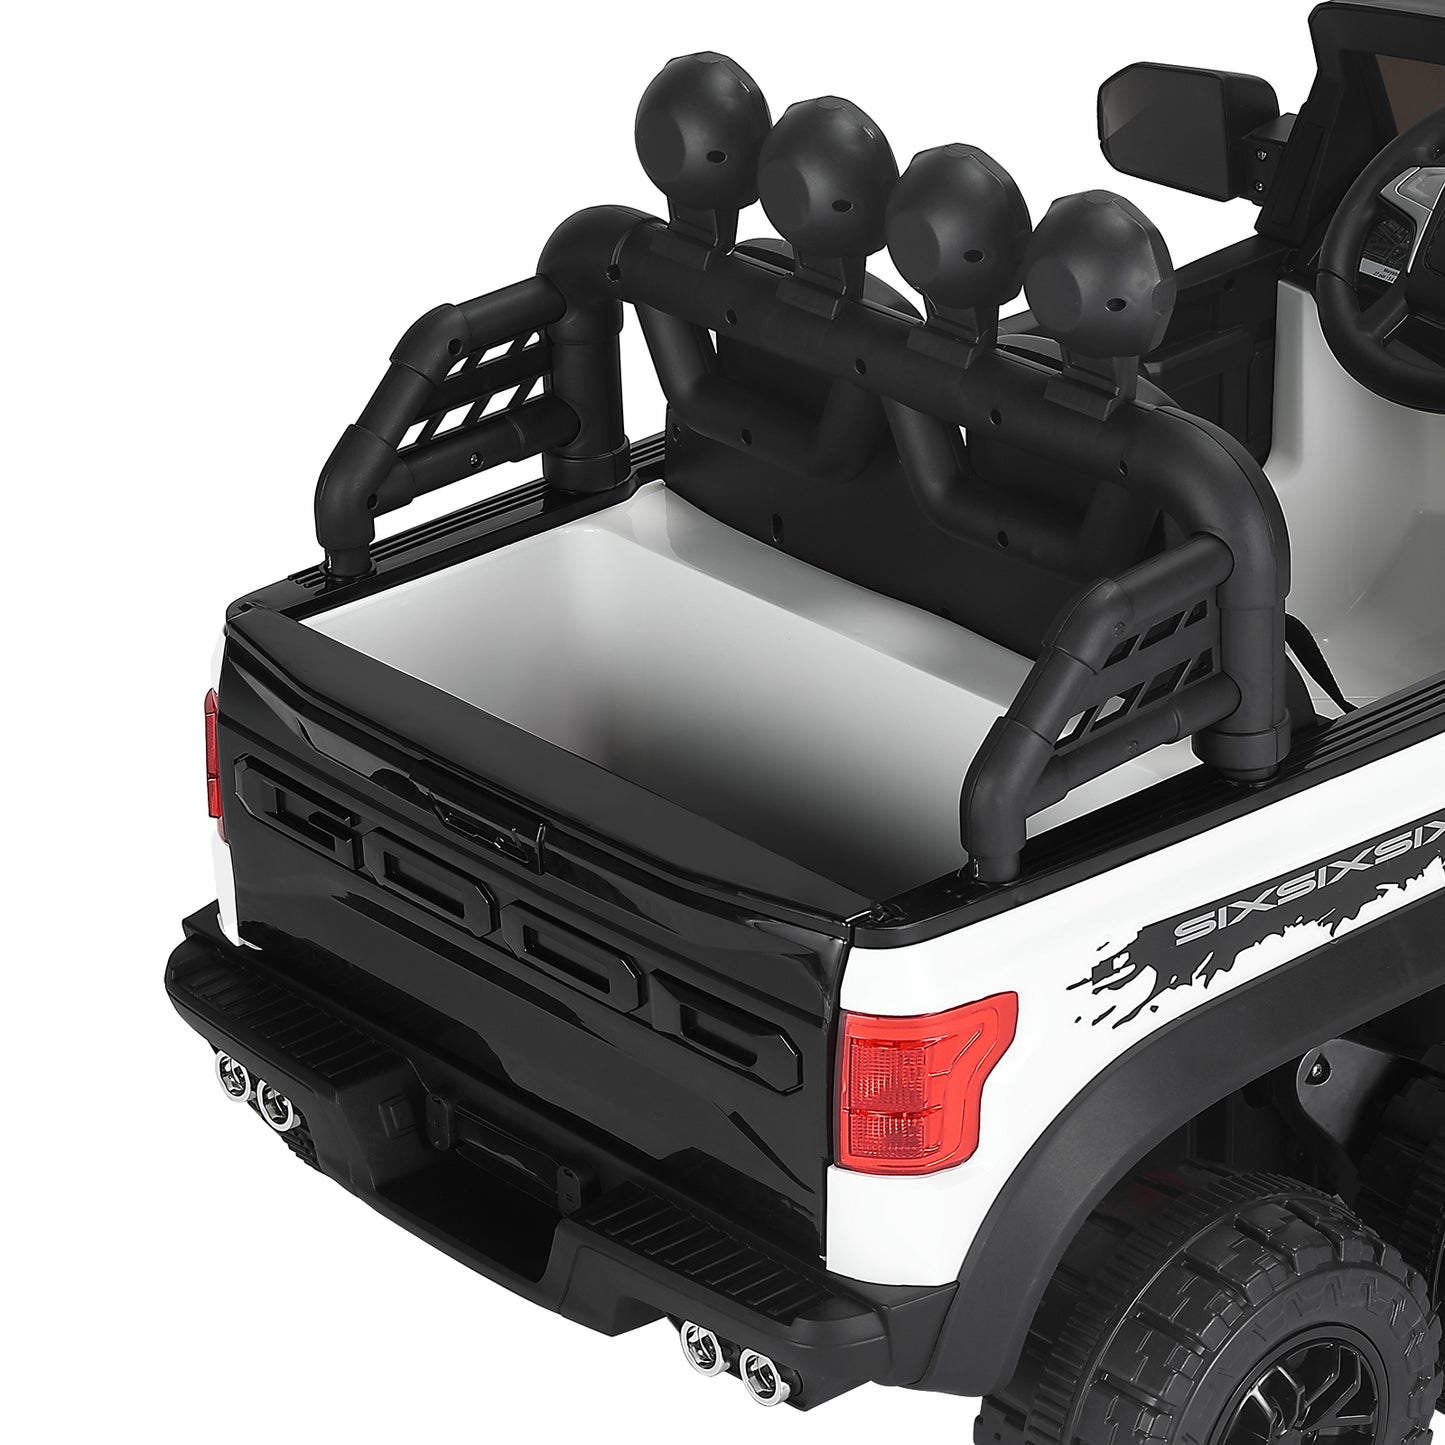 Electric 12V Battery White Kids Ride On Truck Car Pickup w/ RC LED MP3 6 Wheel